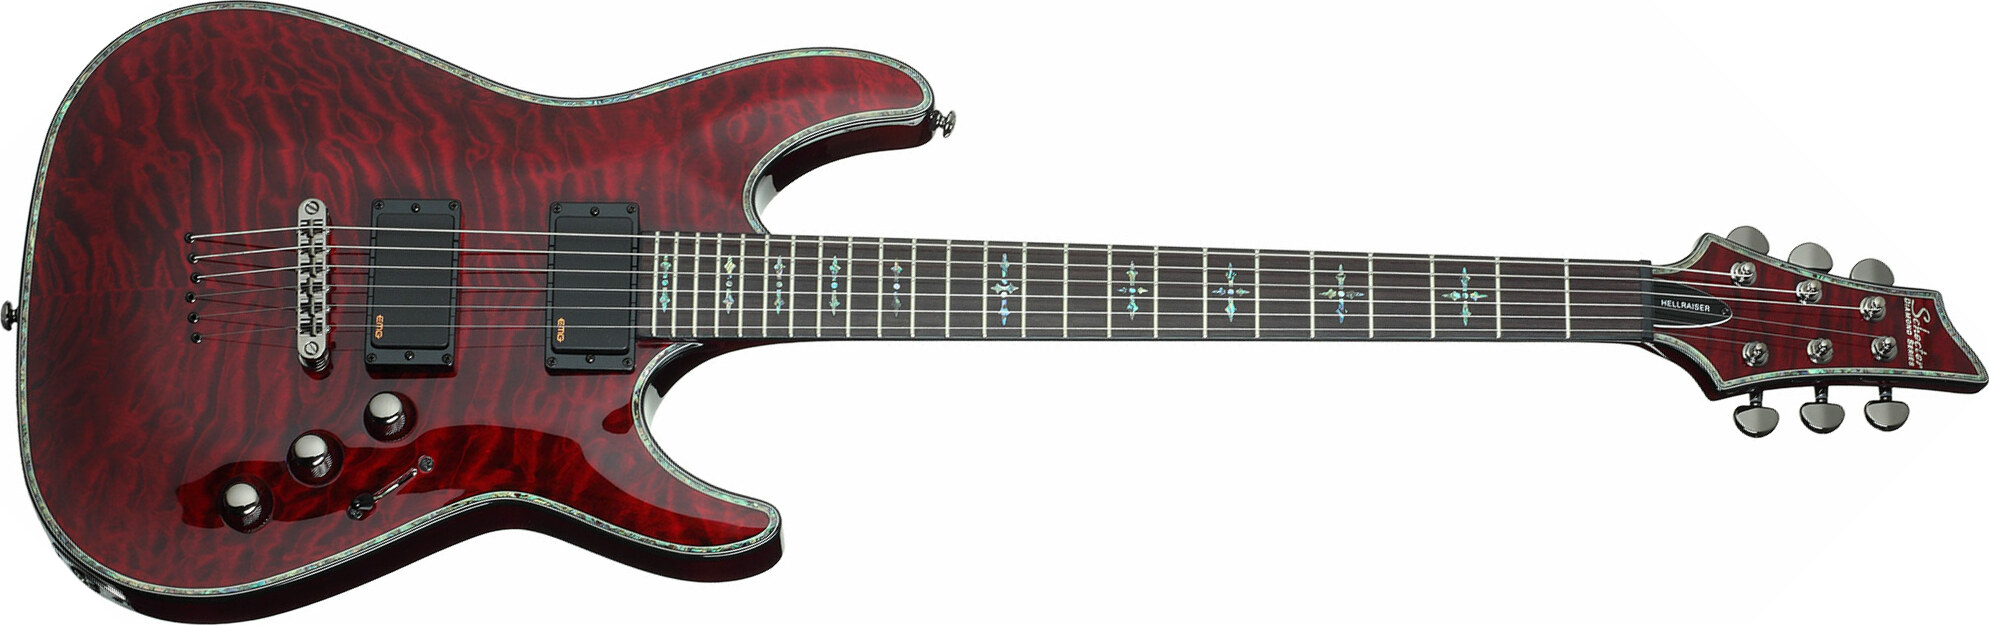 Schecter C-1 Hellraiser 2h Emg Ht Rw - Black Cherry - Str shape electric guitar - Main picture